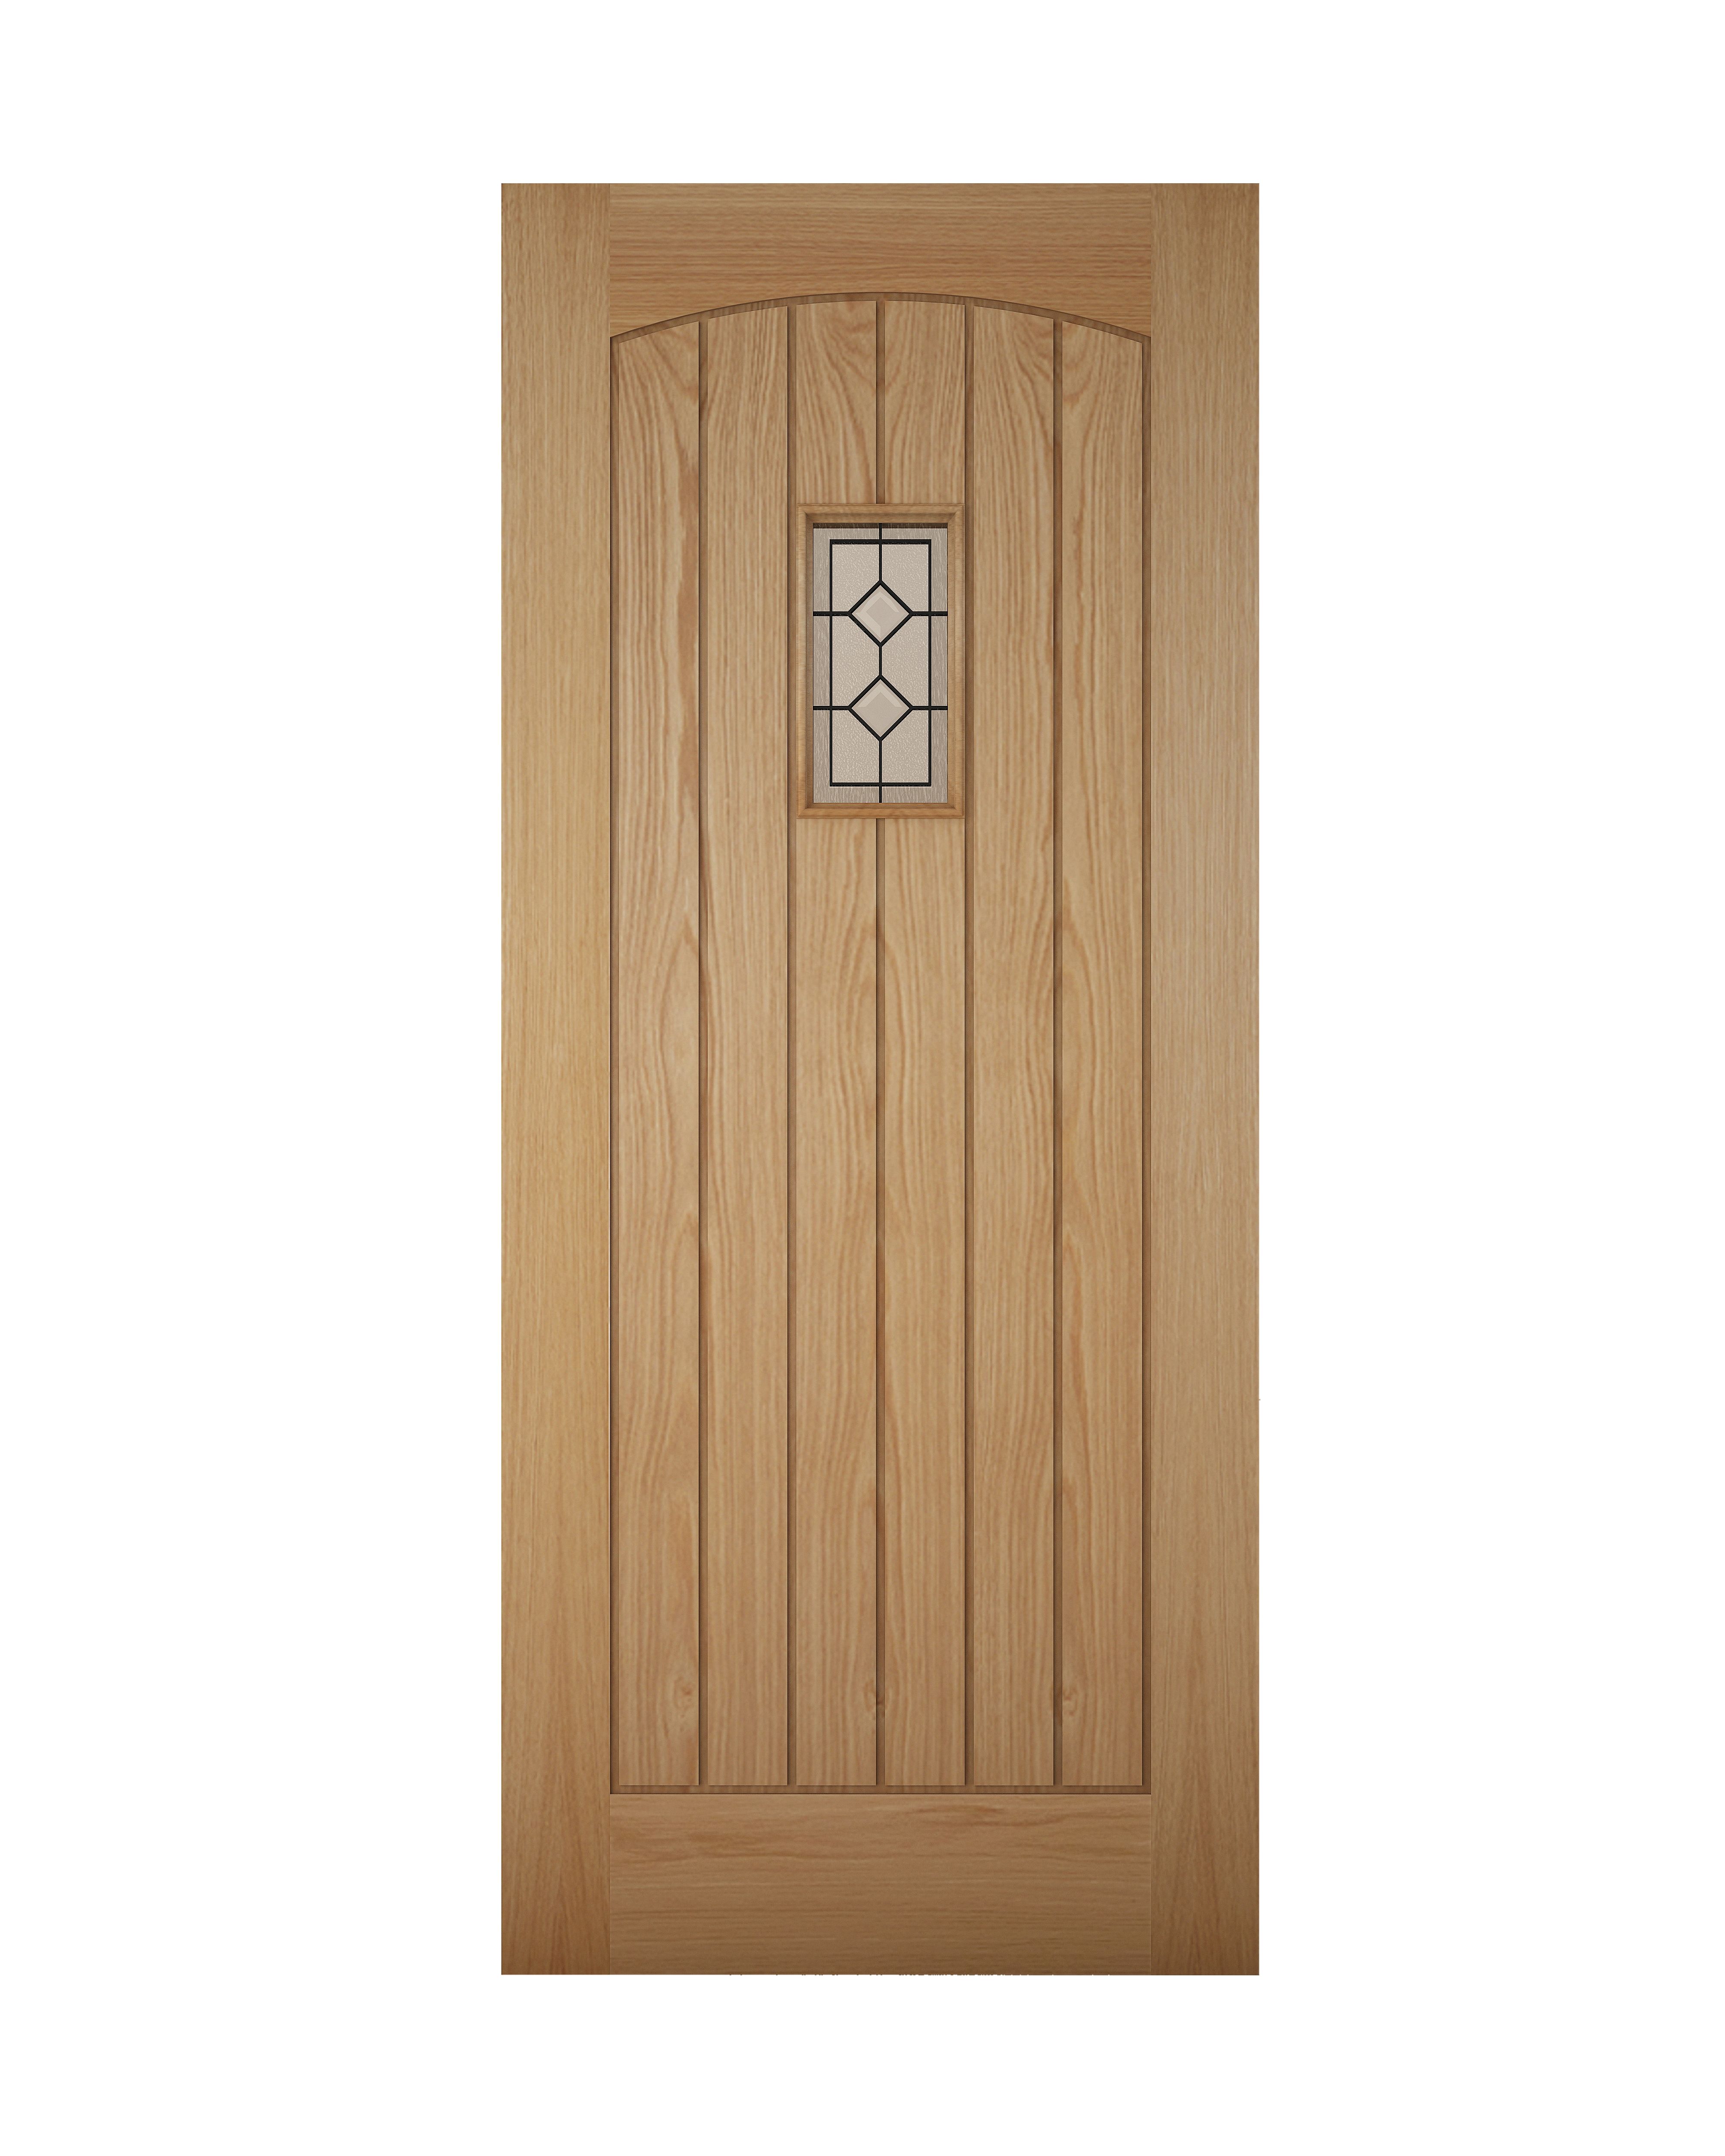 Diamond bevel Leaded Glazed Cottage Wooden White oak veneer External Front door, (H)2032mm (W)813mm